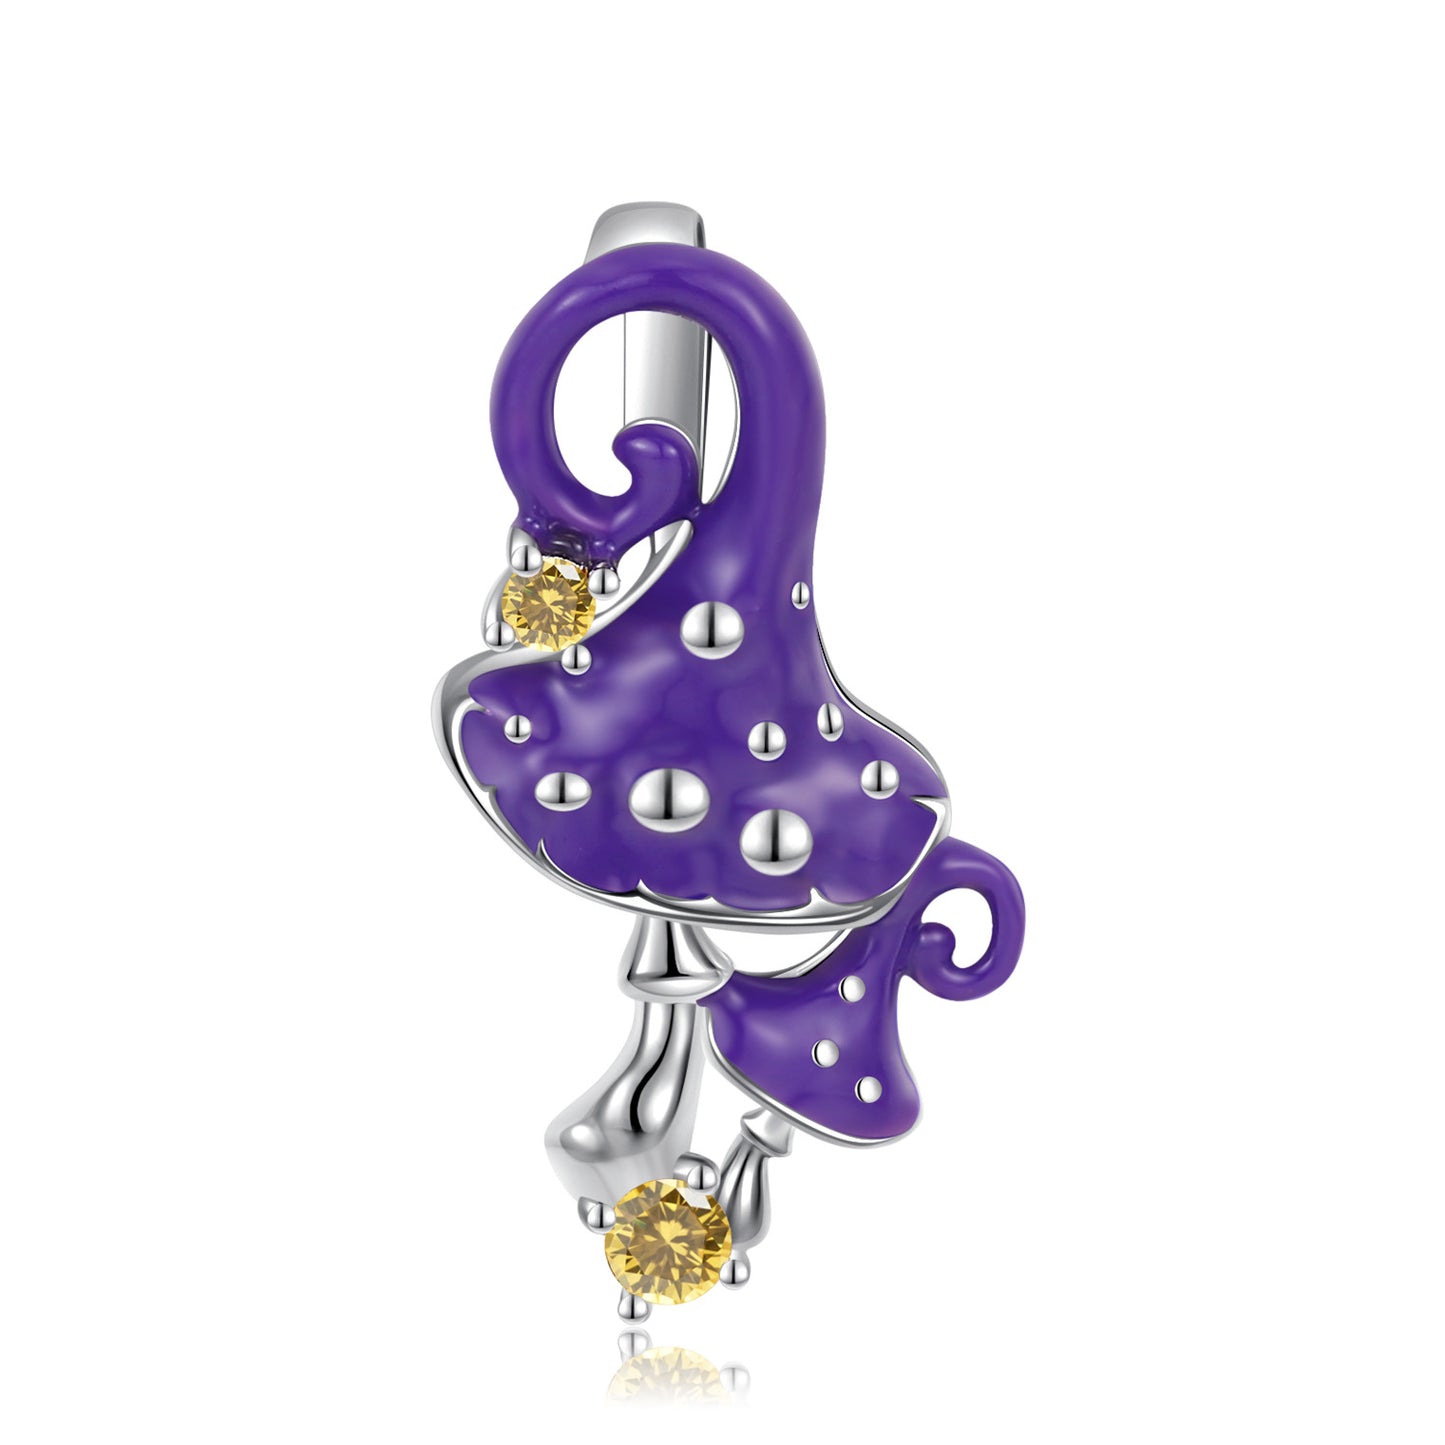 Halloween Purple Poisonous Mushroom Pendant Zircon Silver Necklace